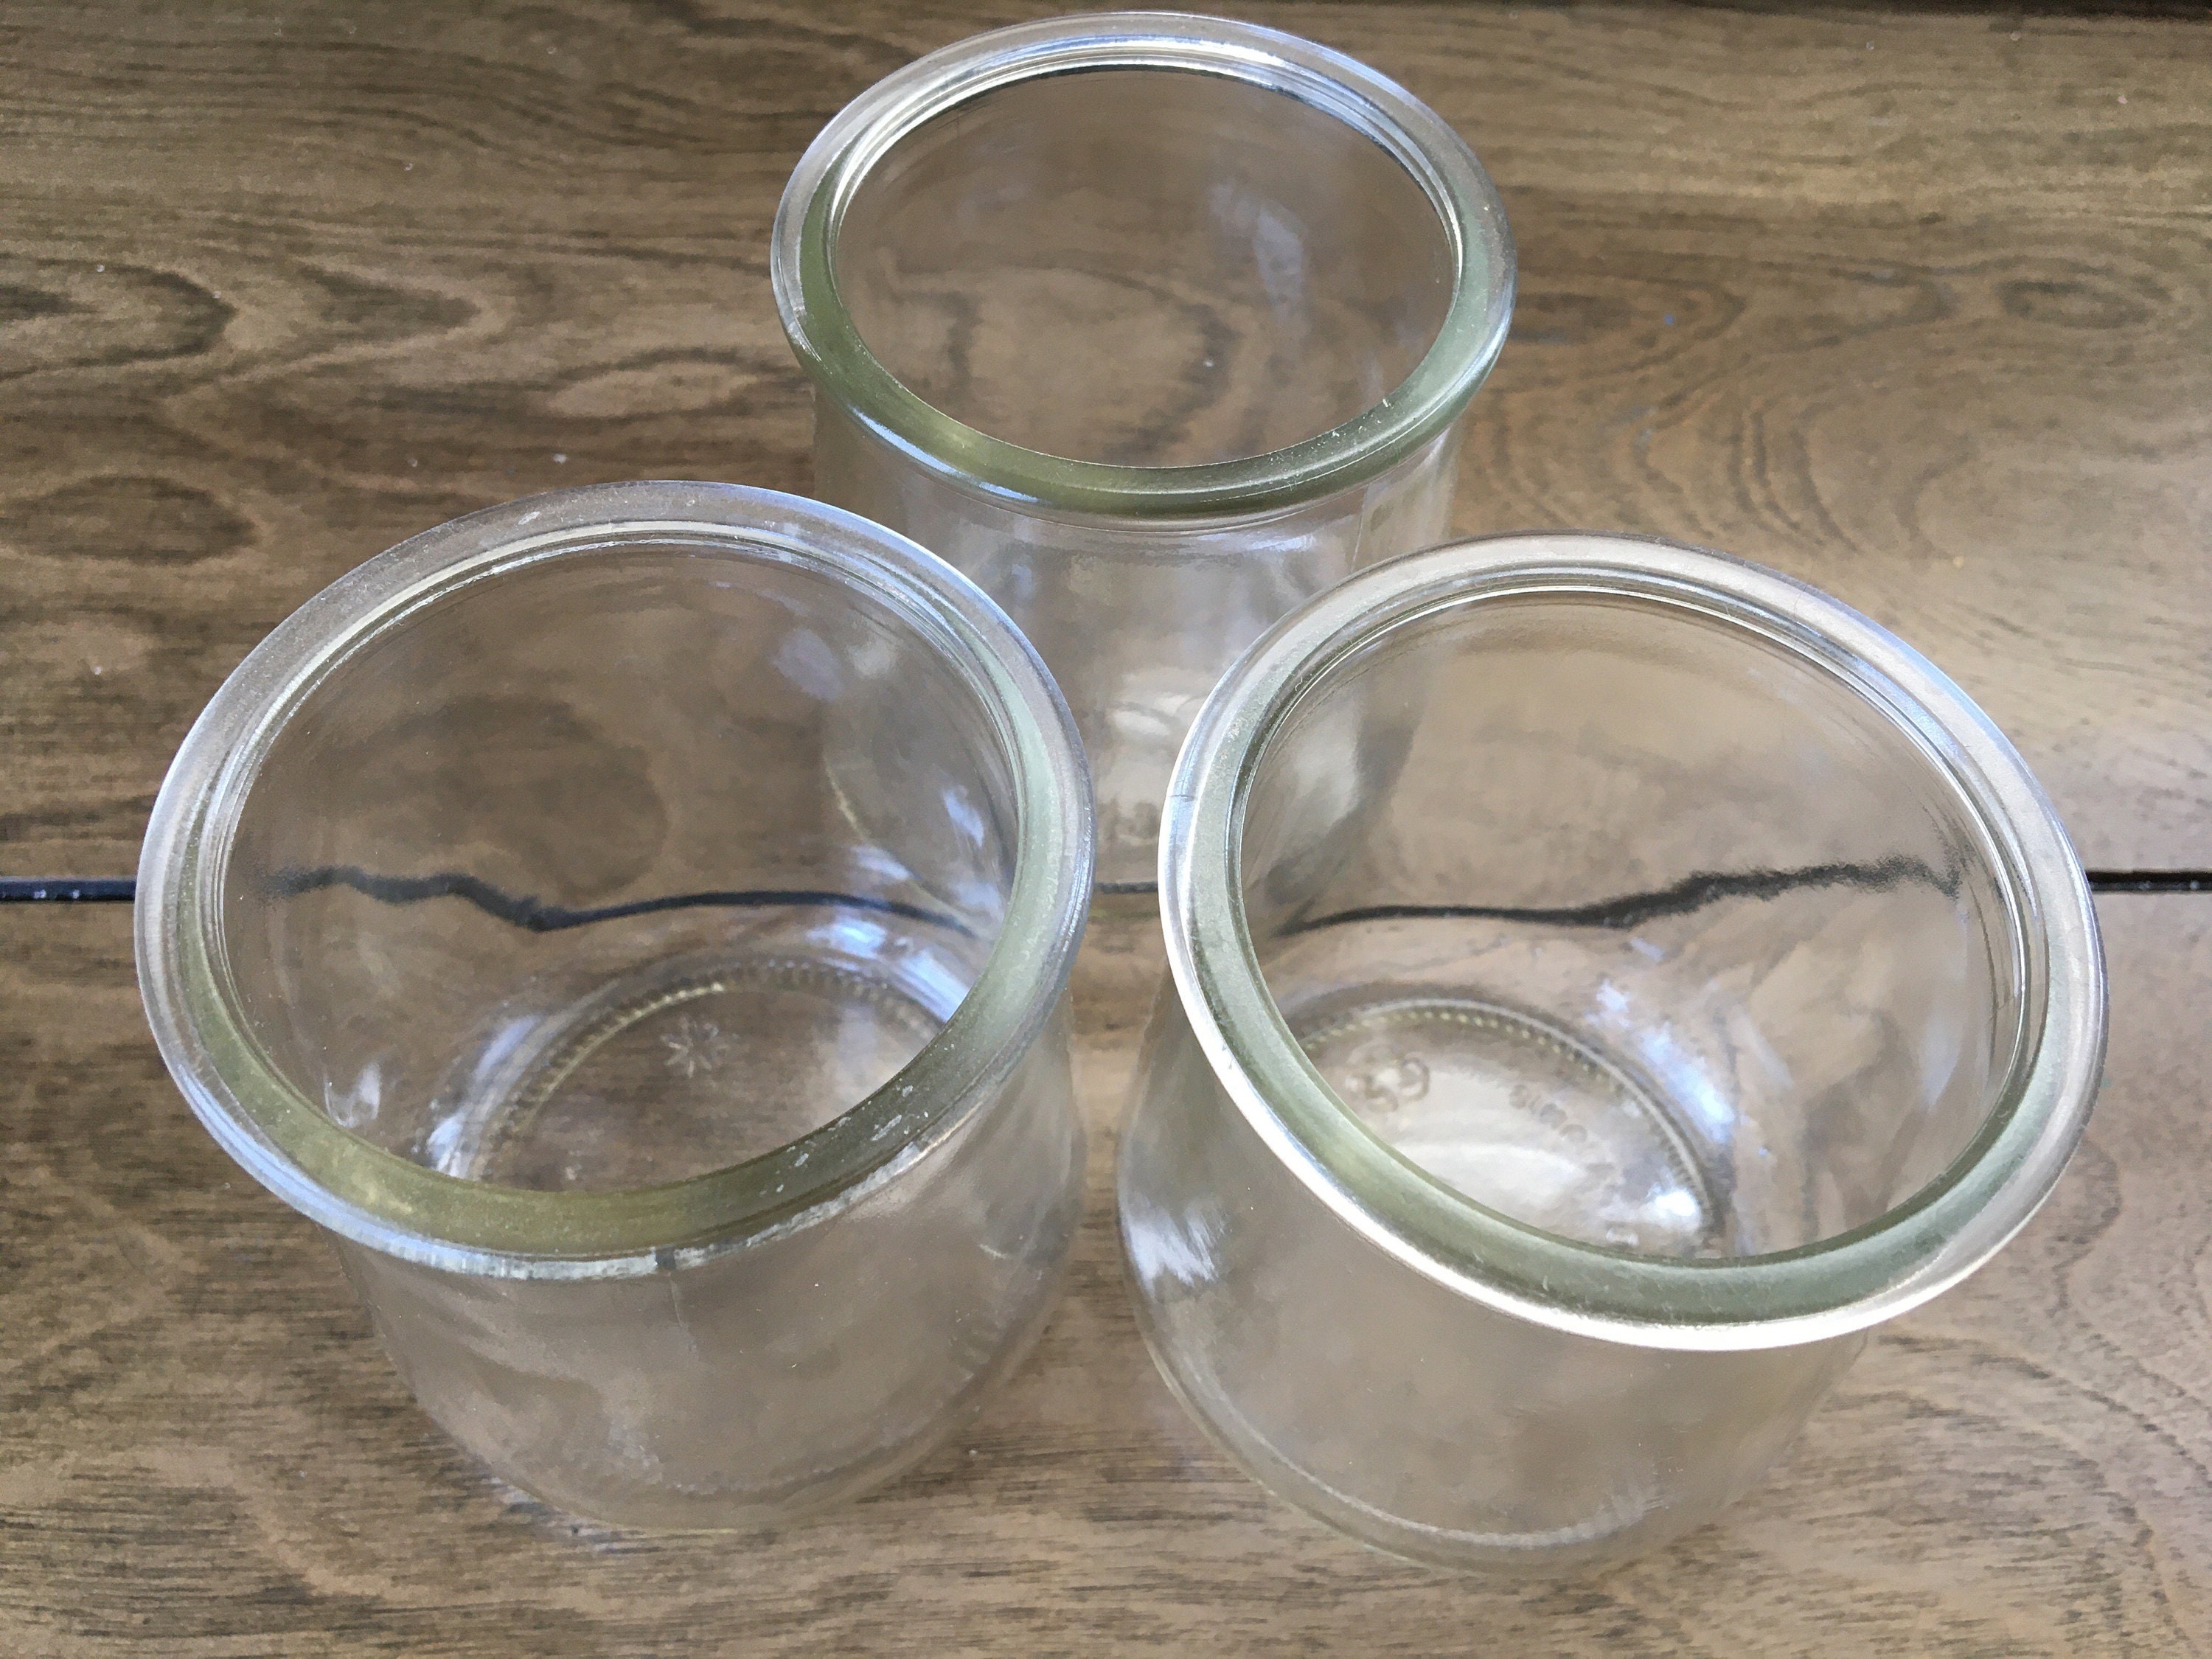 20pcs Oui Yogurt Jar Lids, Yogurt Container Lids, Clear Plastic transparent  Oui Lids For Cookie Coffee Supplies, Glass Jars Containers, Kitchen Storage  Supplies